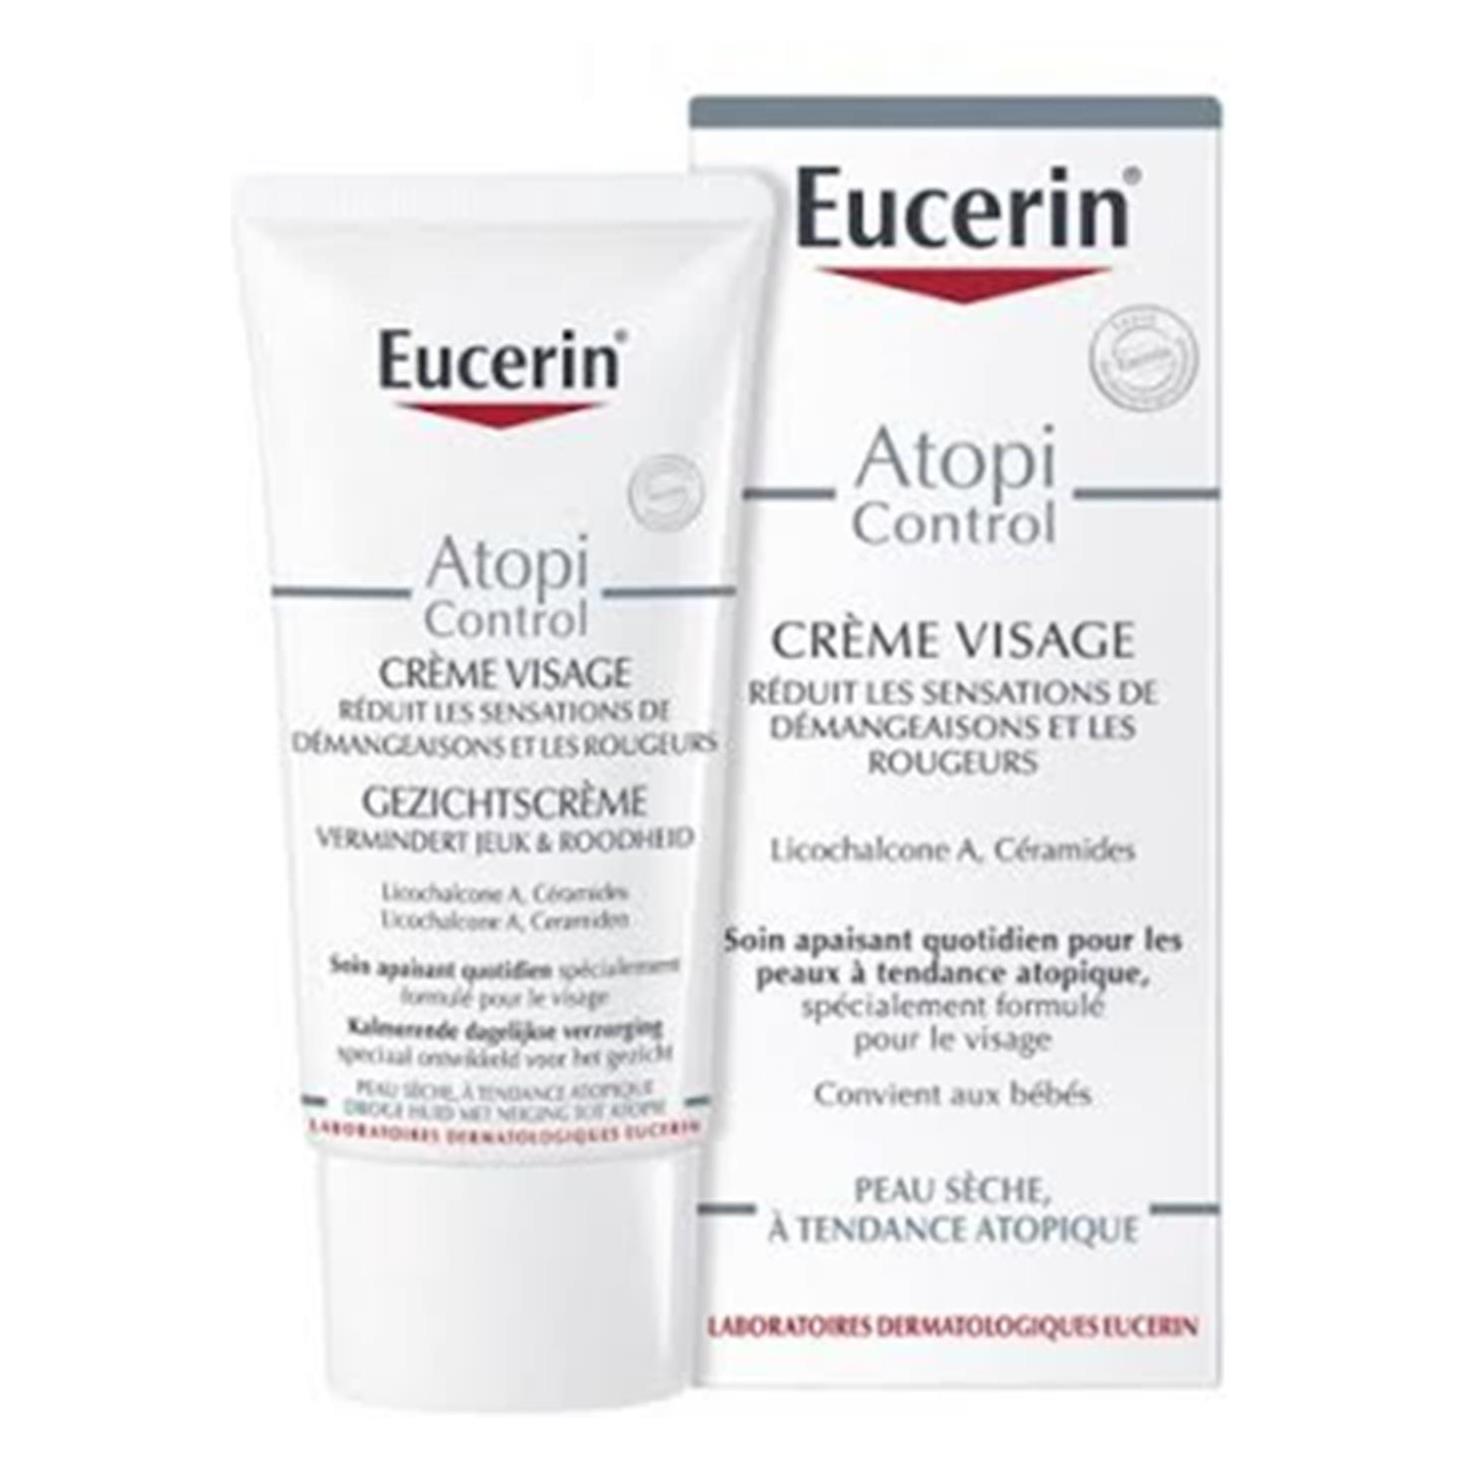 EUCERIN - CREME VISGE [ATOPI CONTROL] [50 ML]